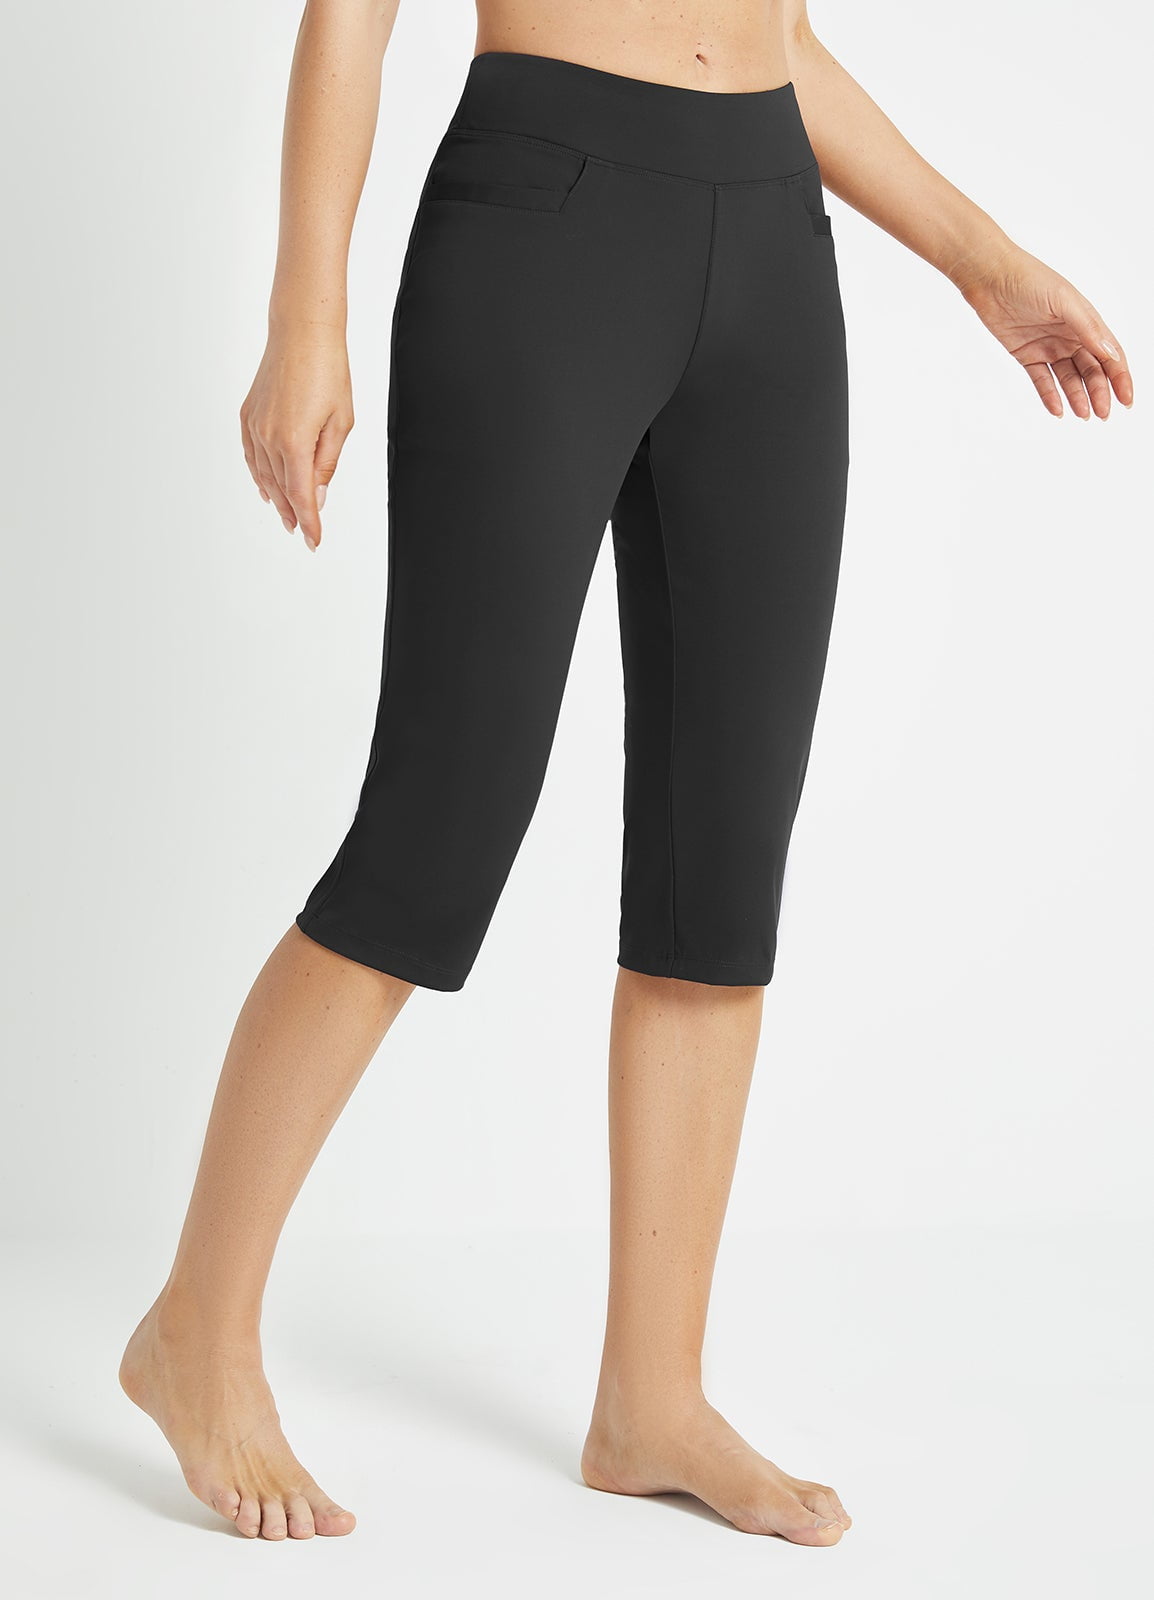 BALEAF Yoga Pants with Pockets for Women Straight Leg High Waisted Slim Slacks Petite Regular Casual Workout Pants 